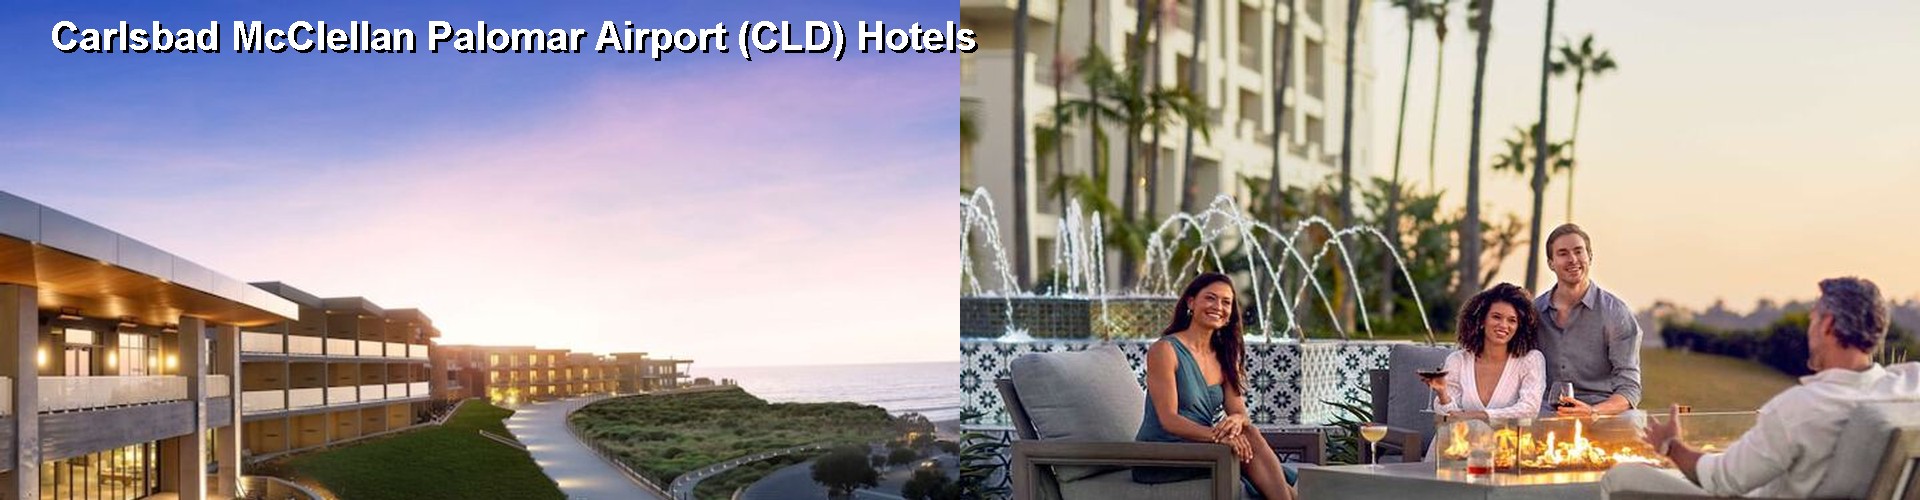 5 Best Hotels near Carlsbad McClellan Palomar Airport (CLD)